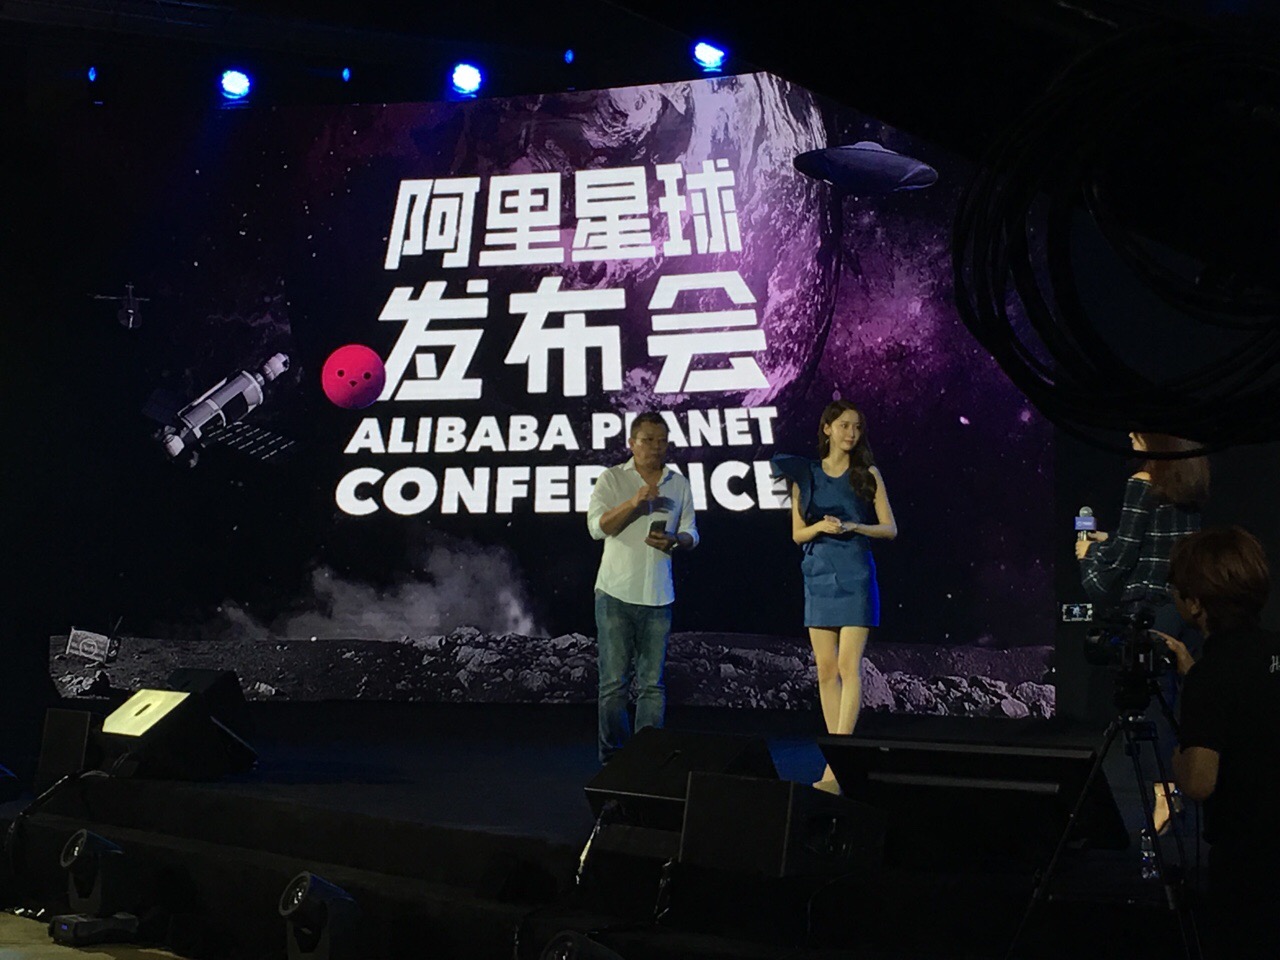 [PIC][18-05-2016]YoonA tham dự “Alibaba Planet Conference” vào trưa nay 5580019fjw1f3zjxmys7fj20zk0qo0yu